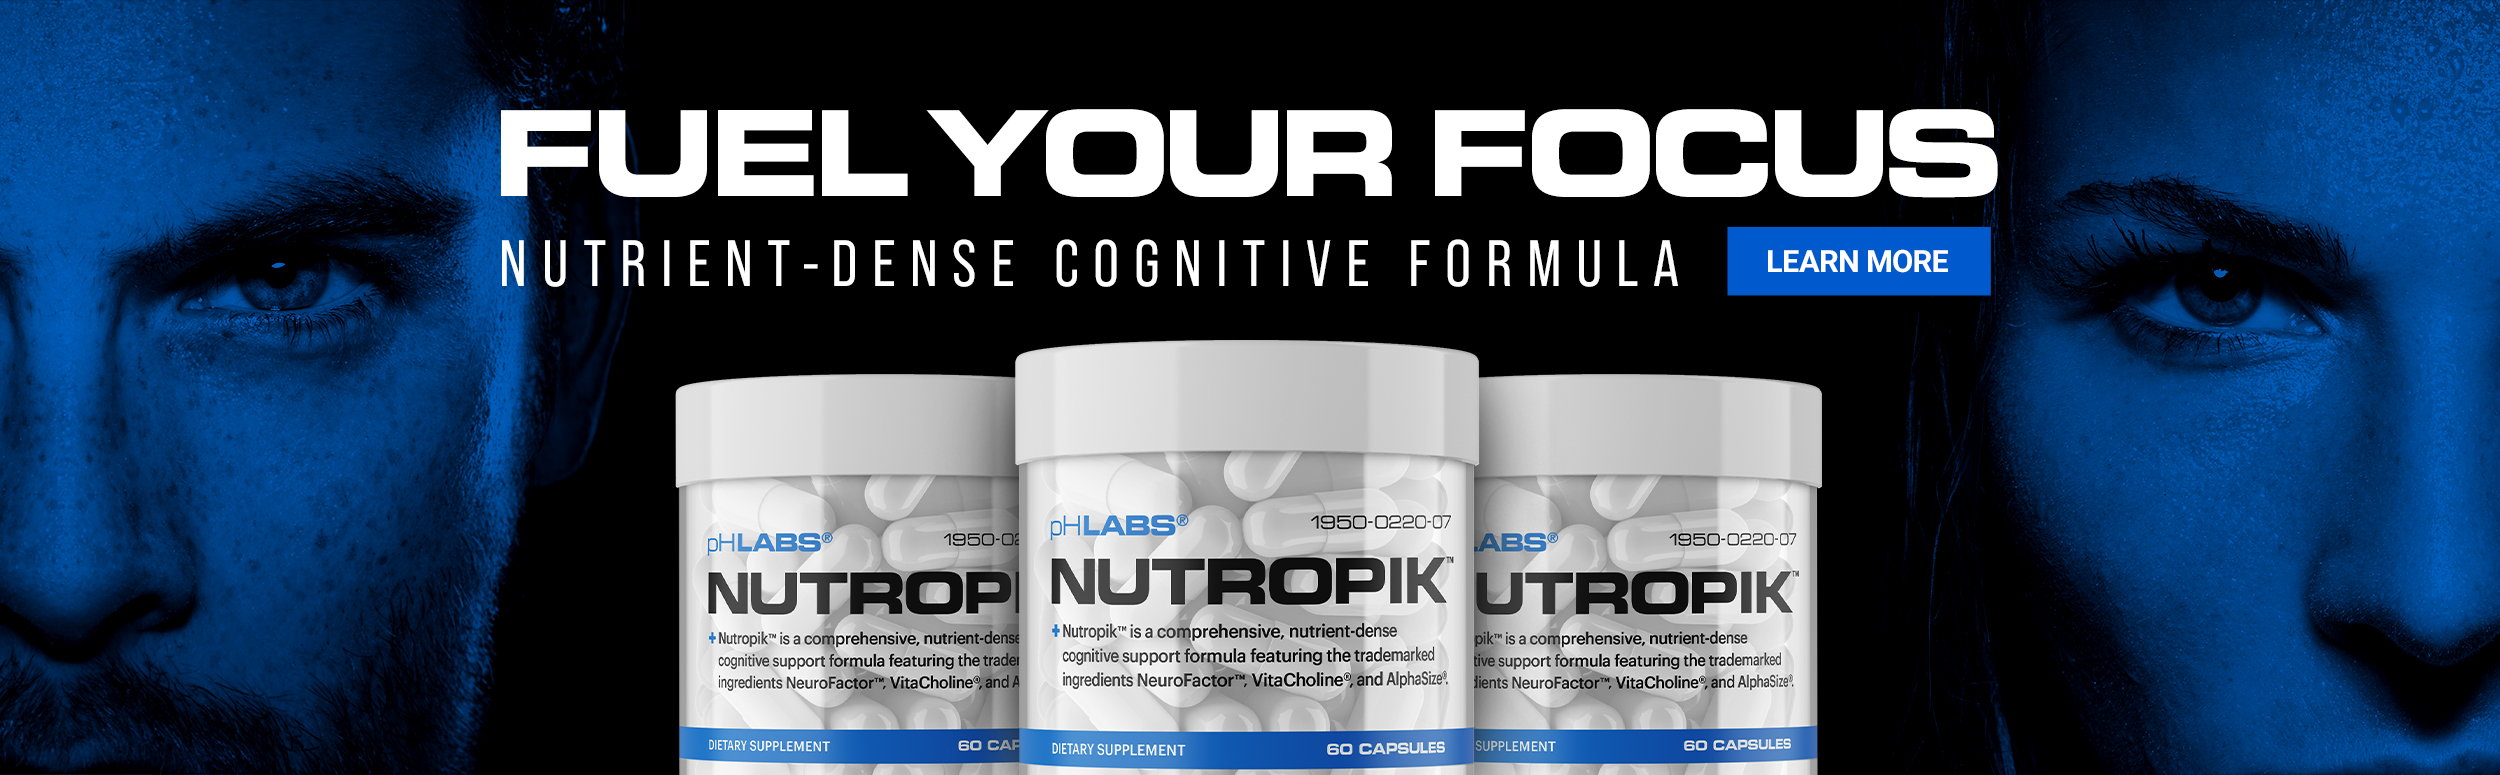 phLabs - Nutropik - Nutrient dense cognitive formula - Click to Learn More